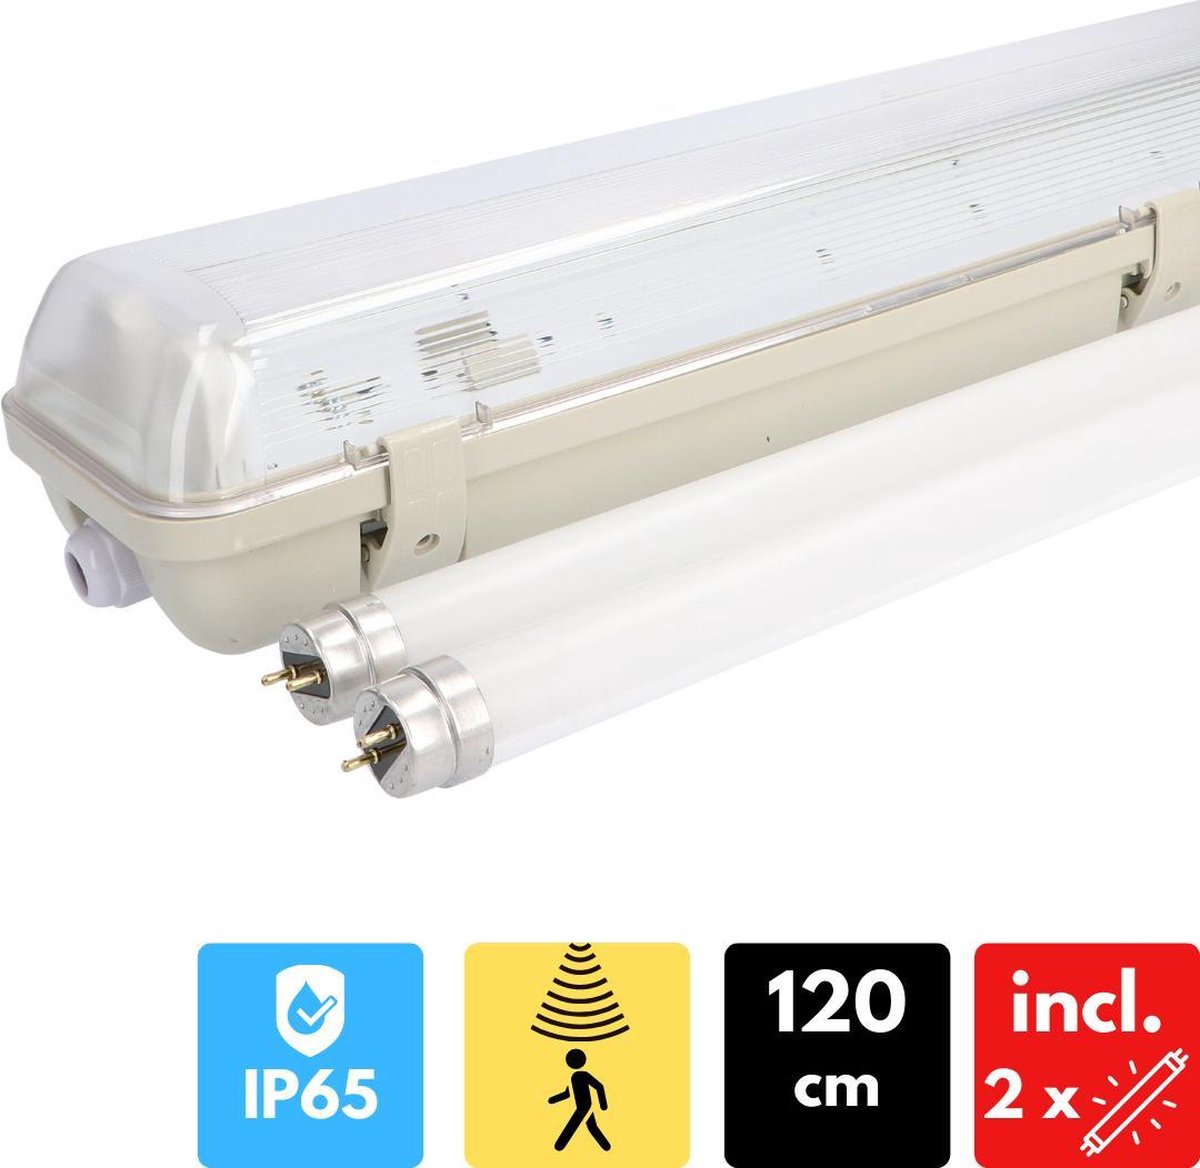 Proventa LED TL lamp 120 cm - Armatuur + 2 x LED 14W buis - IP65 - LED TL  verlichting | bol.com